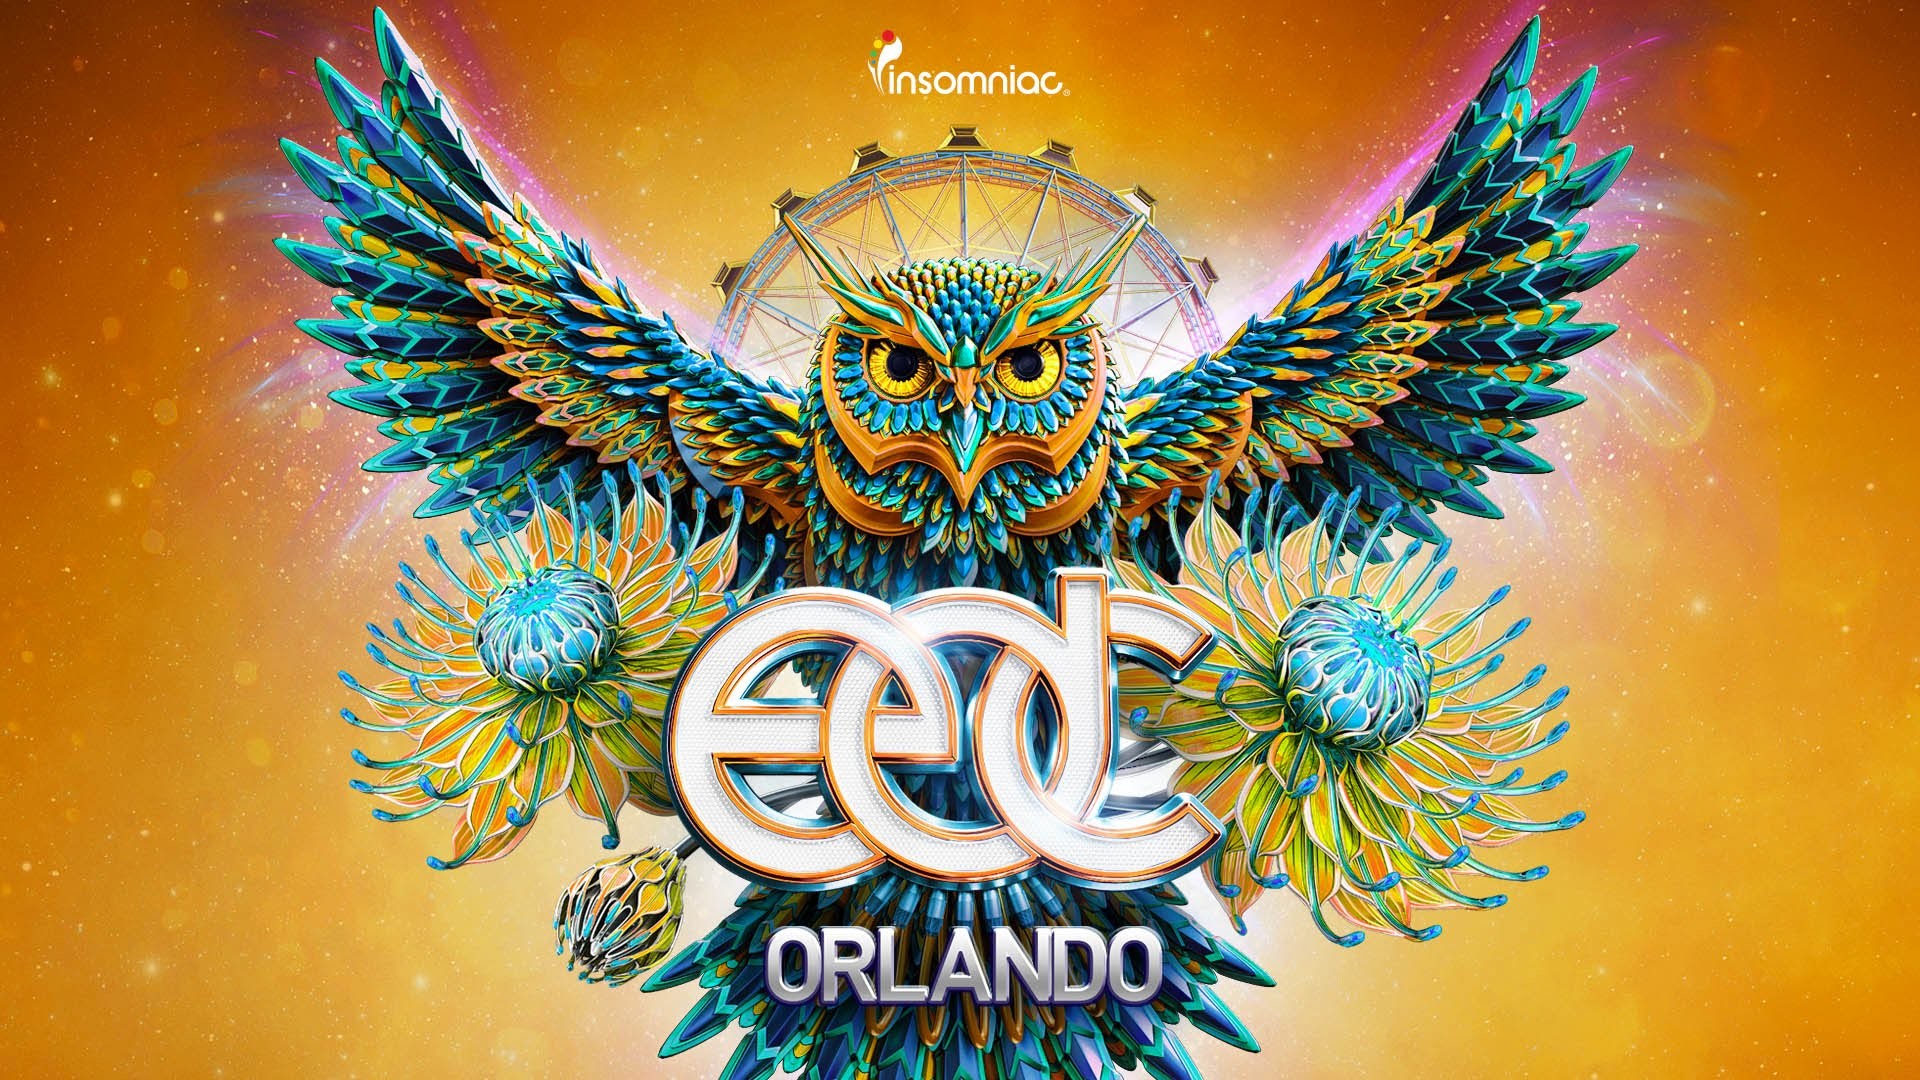 1920x1080 Insomniac announces the return of EDC Orlando in 2015